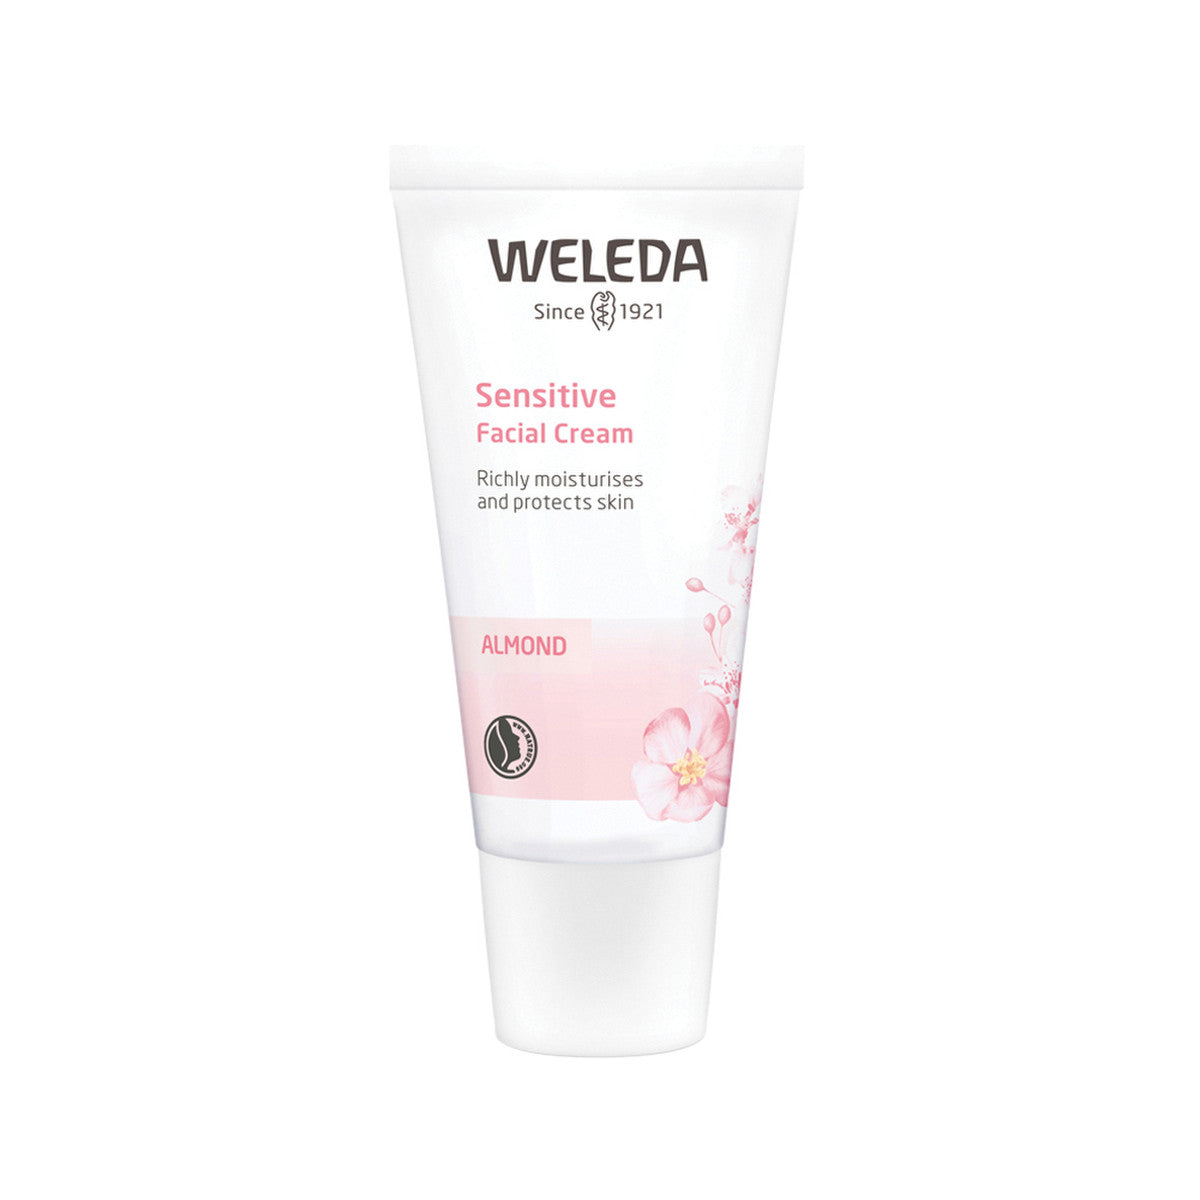 Weleda - Almond Facial Cream